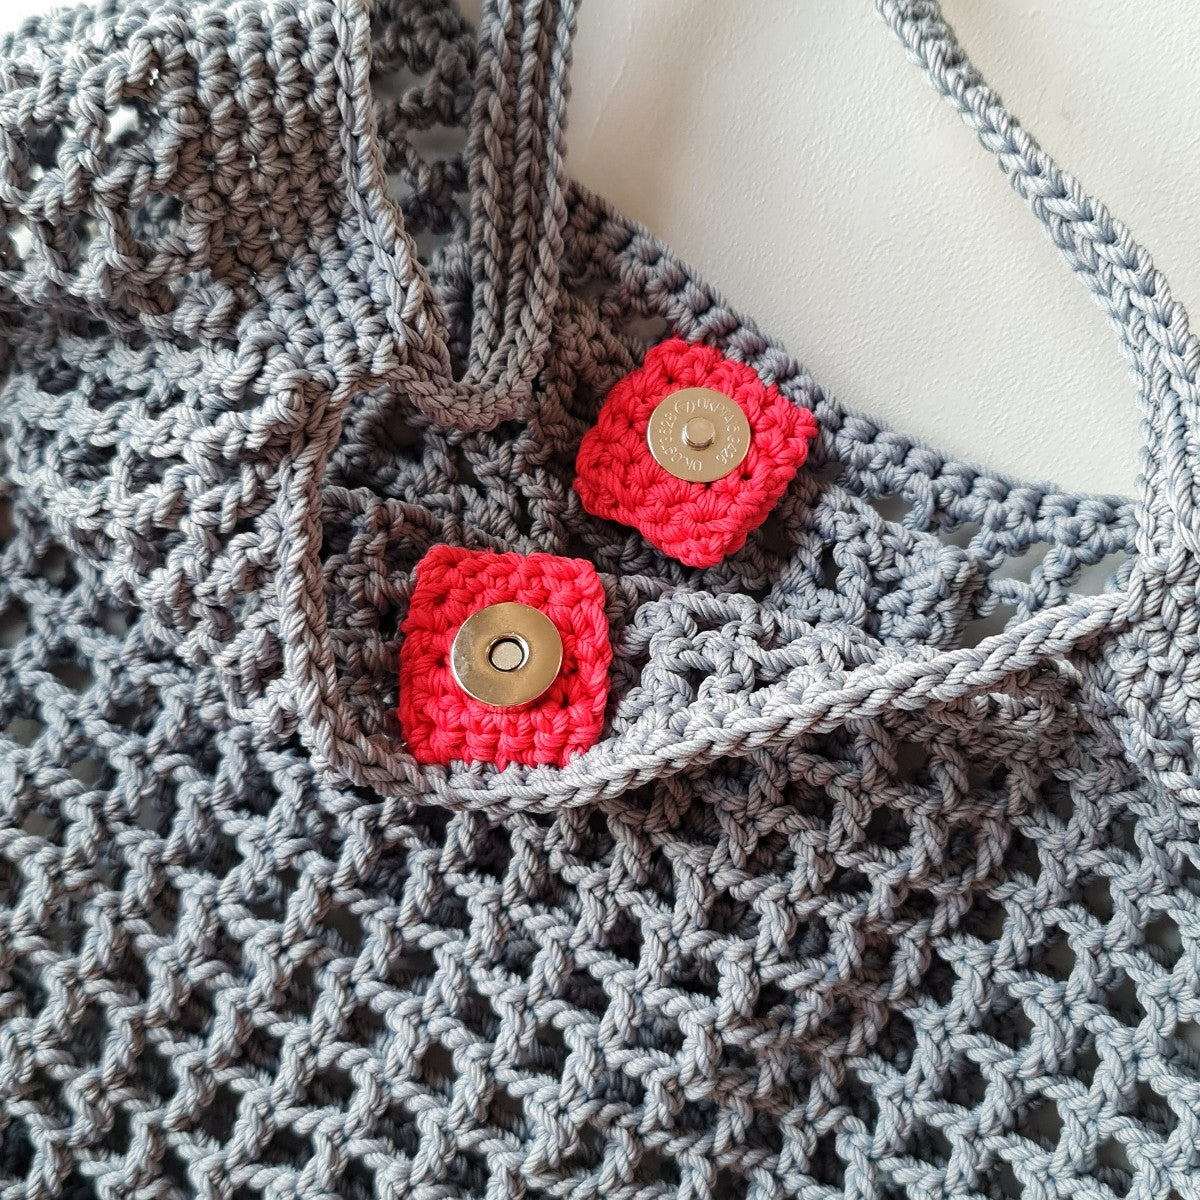 Halv Crochet Steel Grey Bag